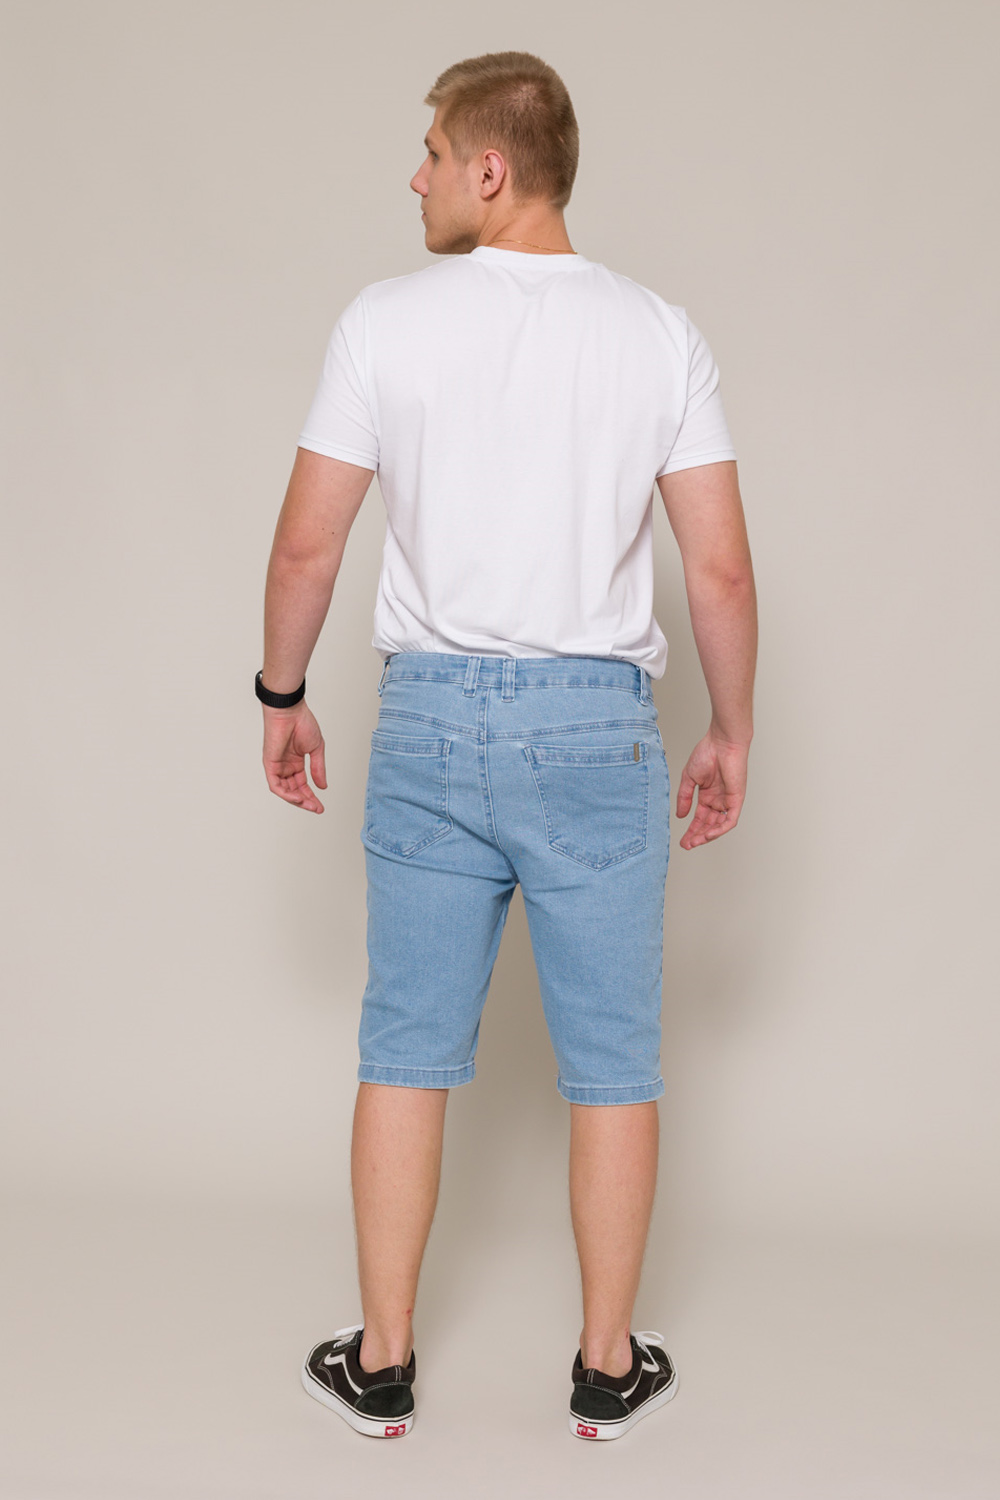 Bermuda Jeans Basic 5206 - Jeans Super Claro